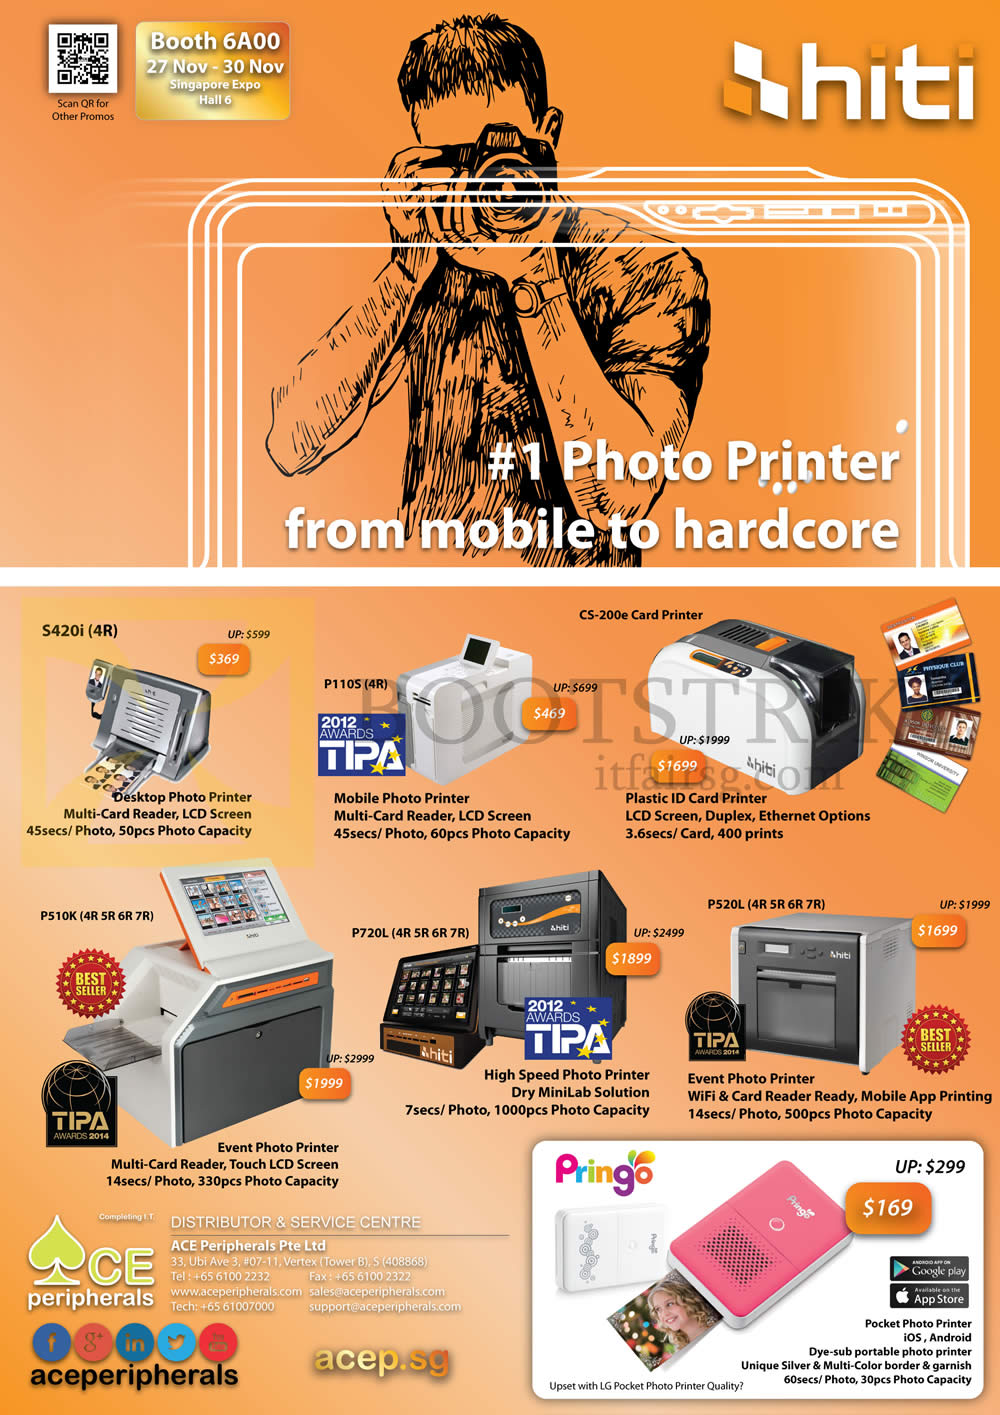 SITEX 2014 price list image brochure of Ace Peripherals Printers HiTi Pringo Pocket P110S, S420i, P720L, P520L, P510K, CS 200e